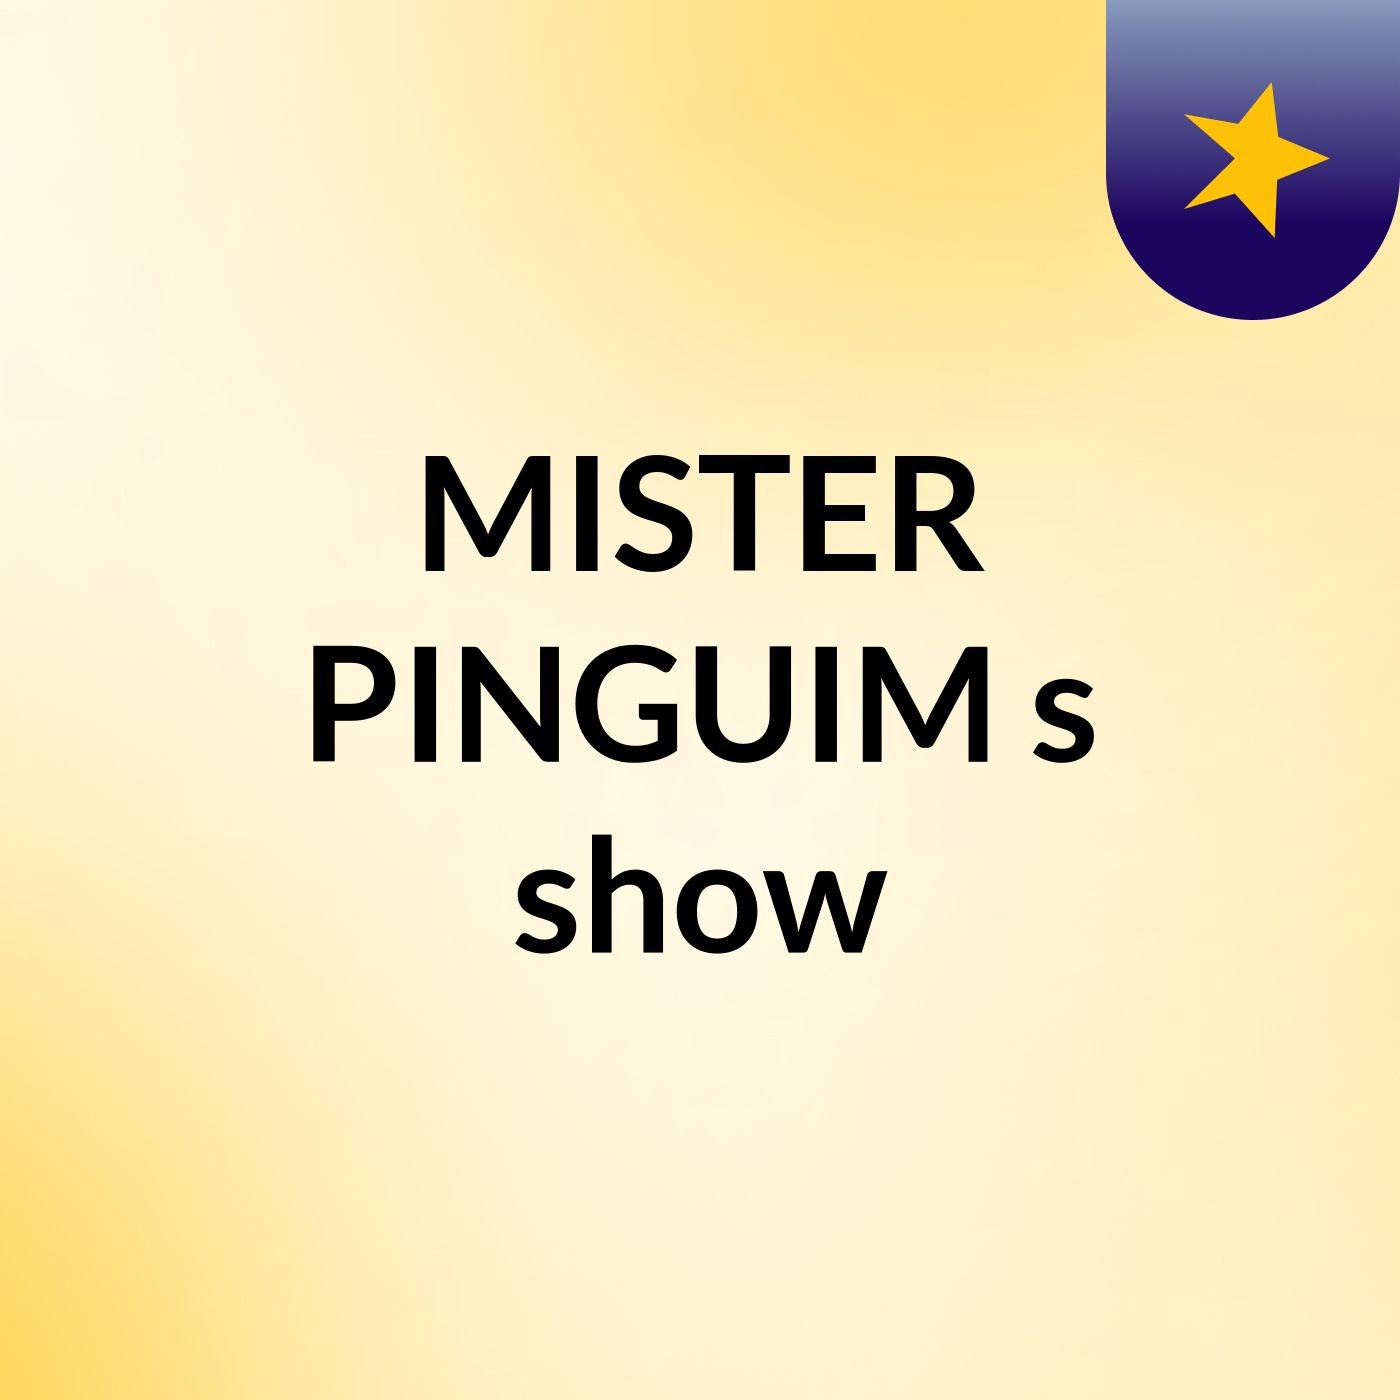 MISTER PINGUIM's show